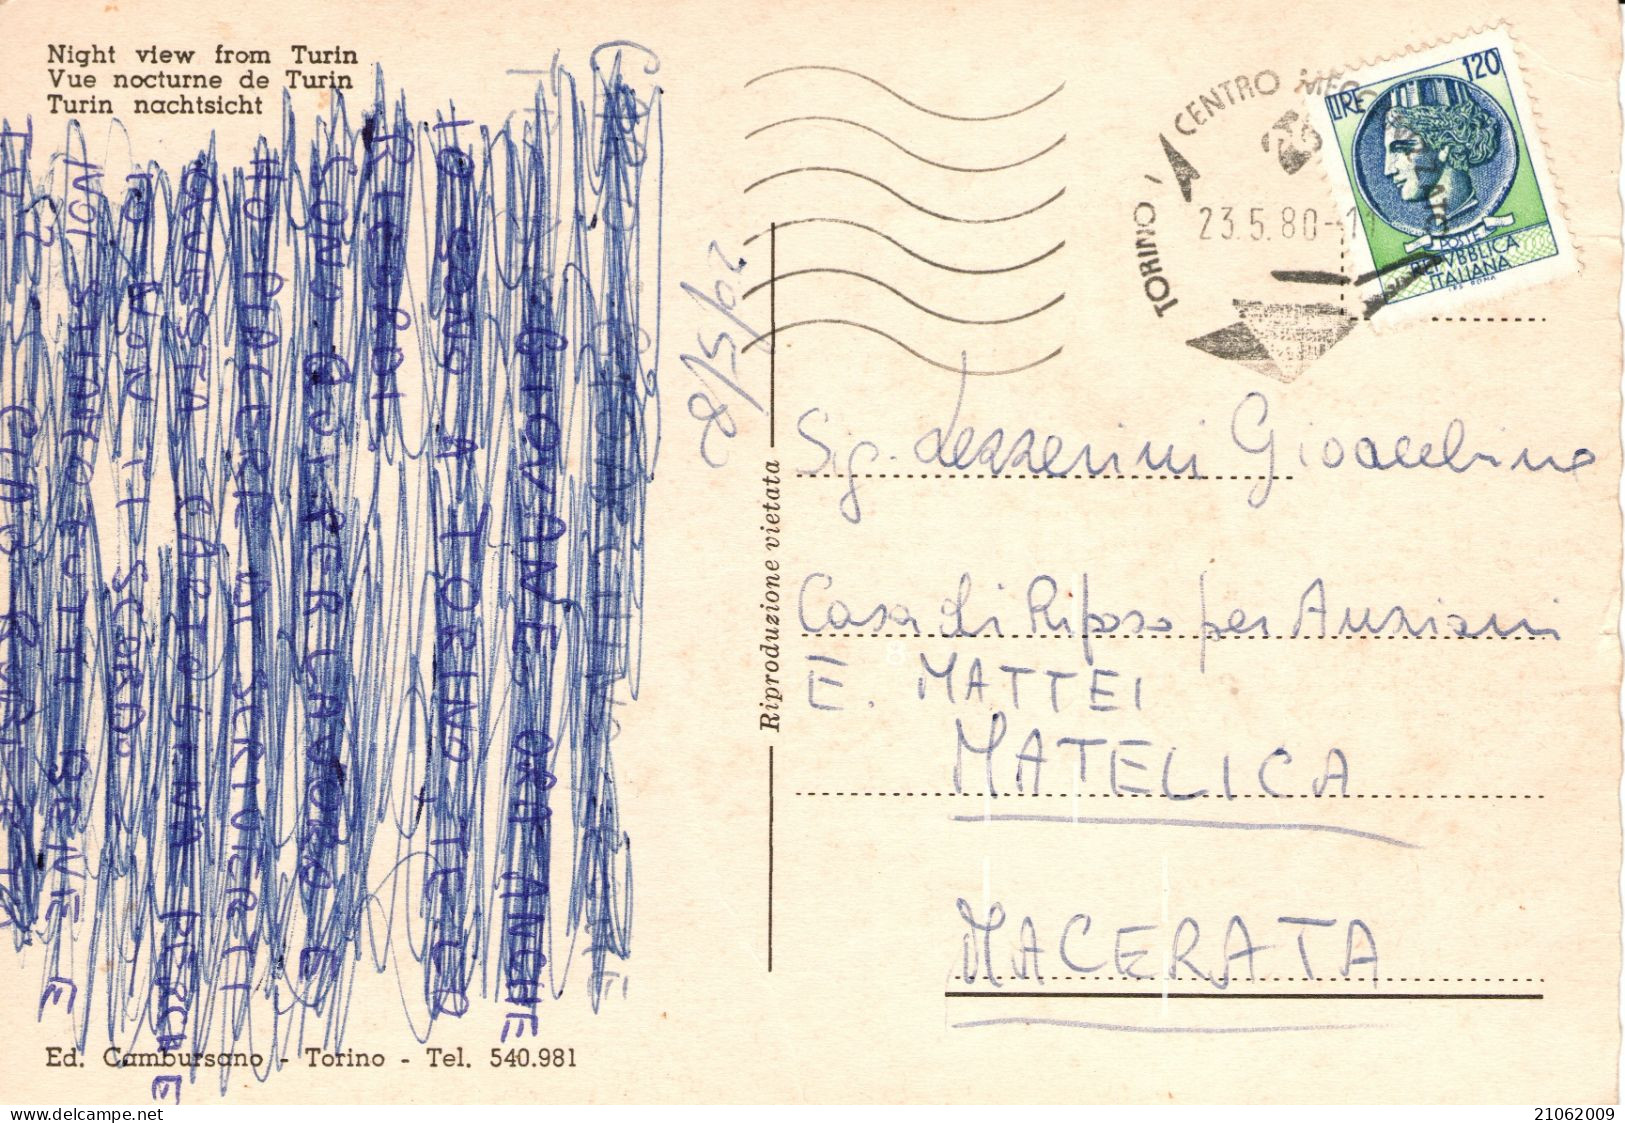 TORINO - VEDUTINE - PIAZZA S. CARLO PALAZZO MADAMA STAZIONE PORTA NUOVA MOLE ANTONELLIANA E PANORAMA - NOTTURNO - V1980 - Mehransichten, Panoramakarten